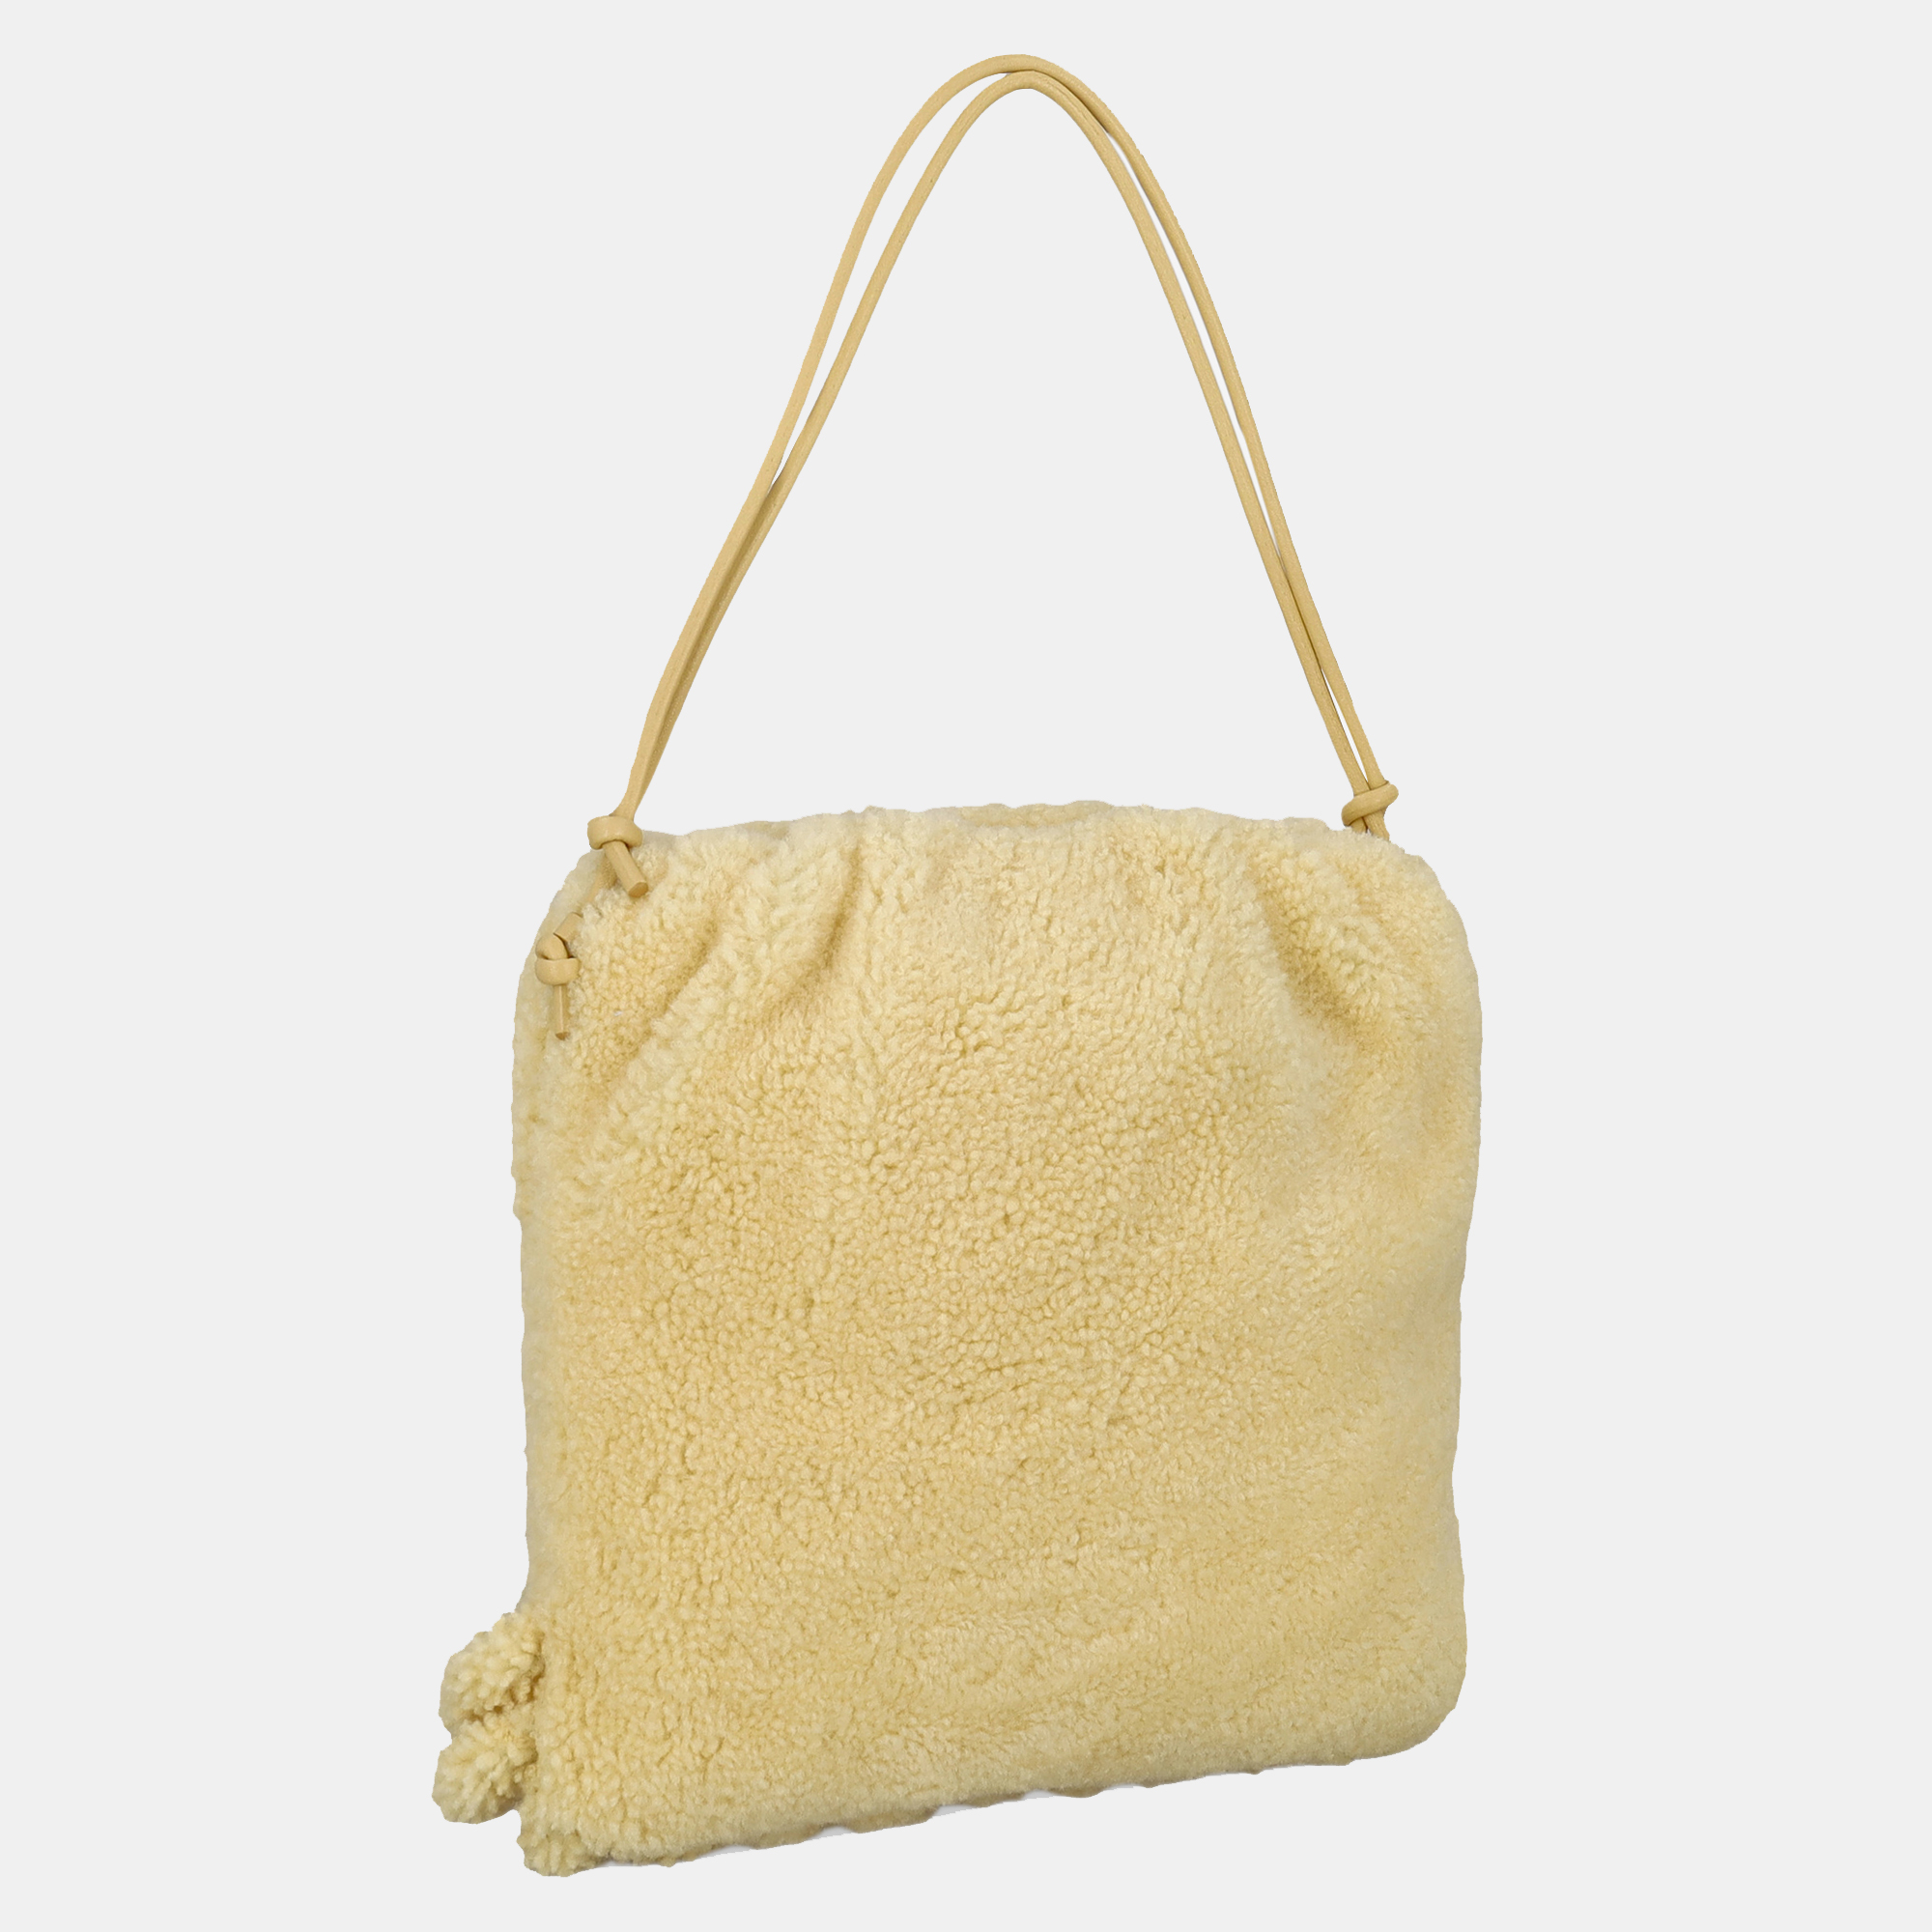 Bottega Veneta Women's Leather Shoulder Bag - Yellow - One Size